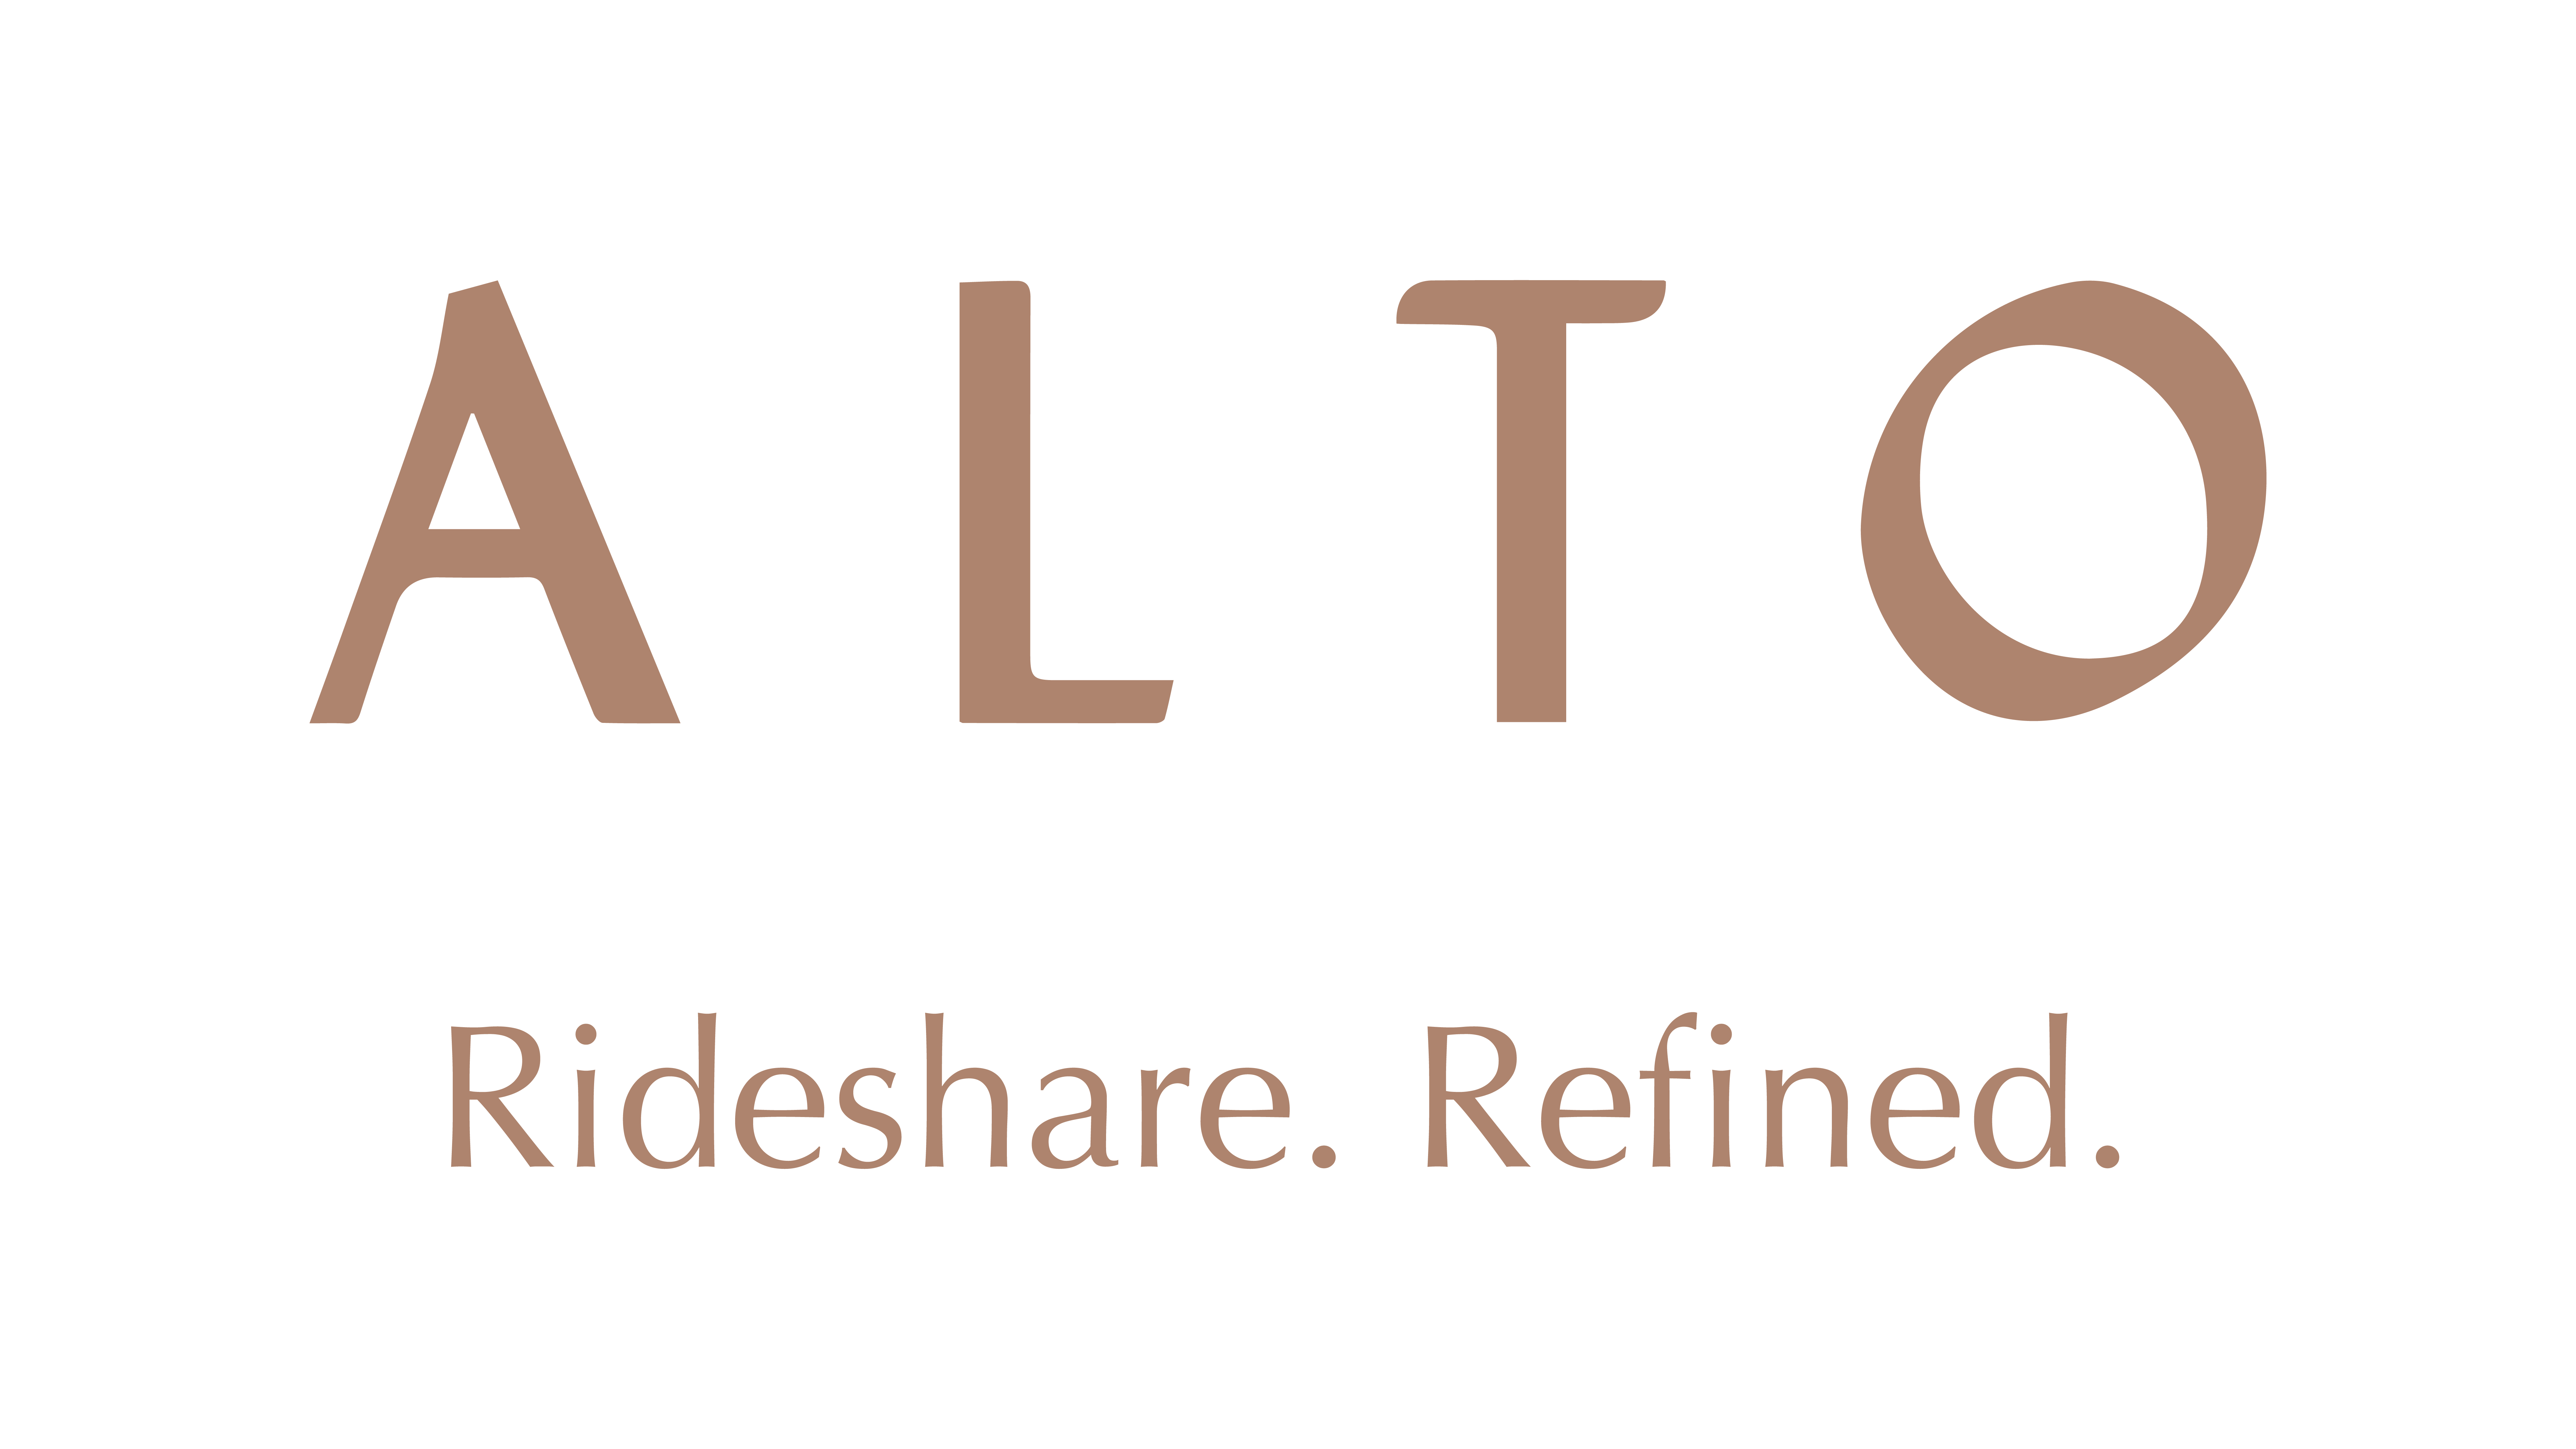 Alto Rideshare - Washington Area Women's Foundation Website